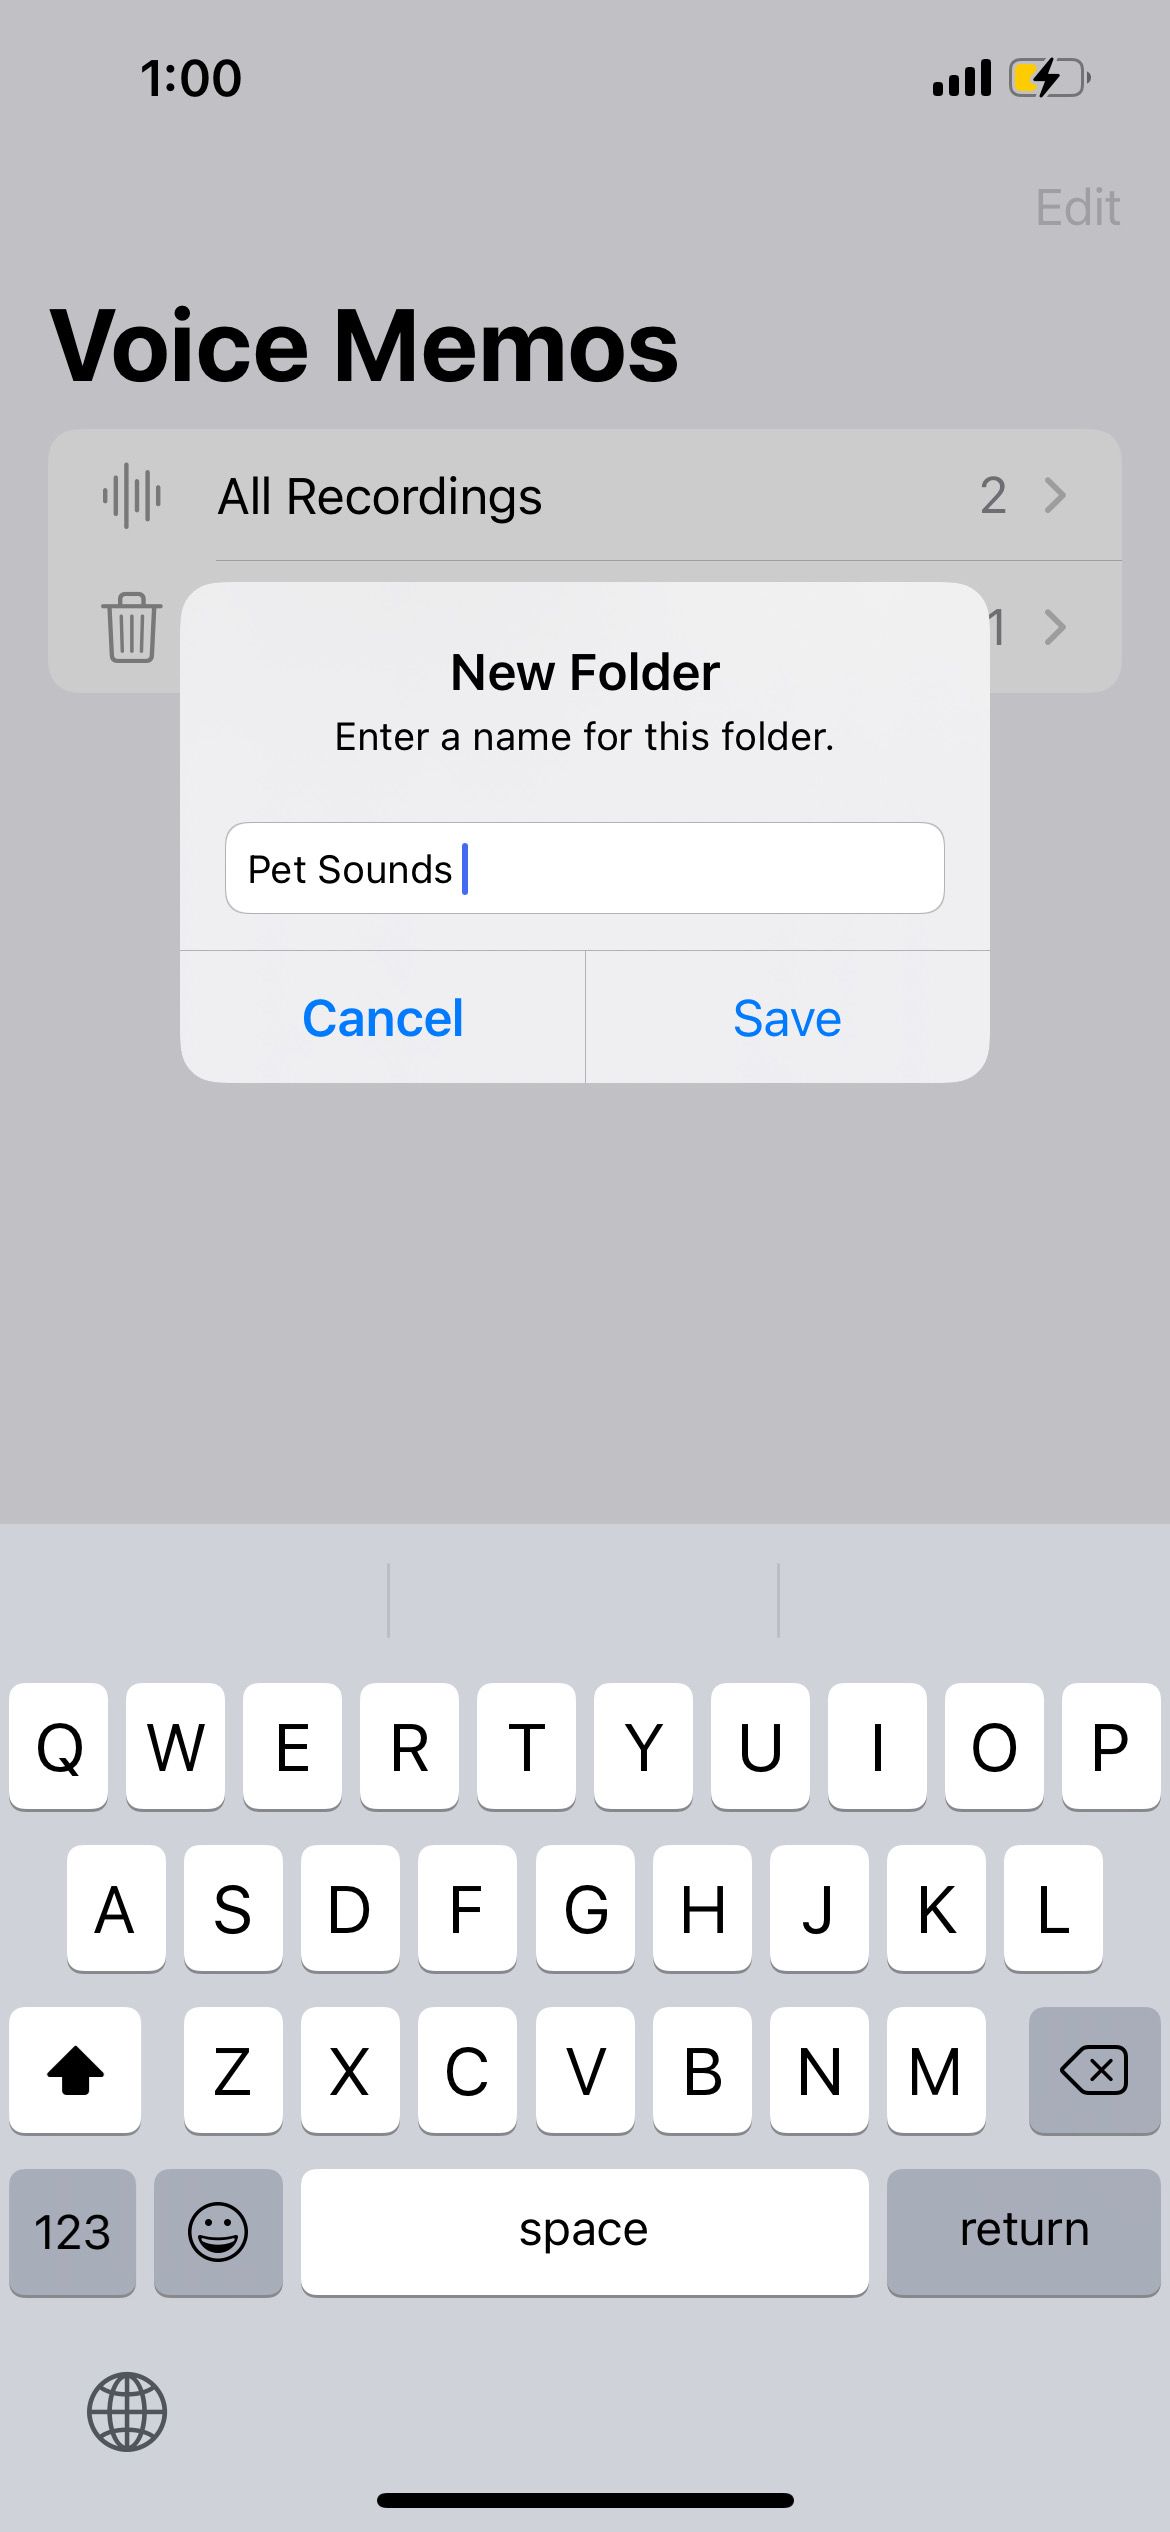 new folder in iphone voice memos